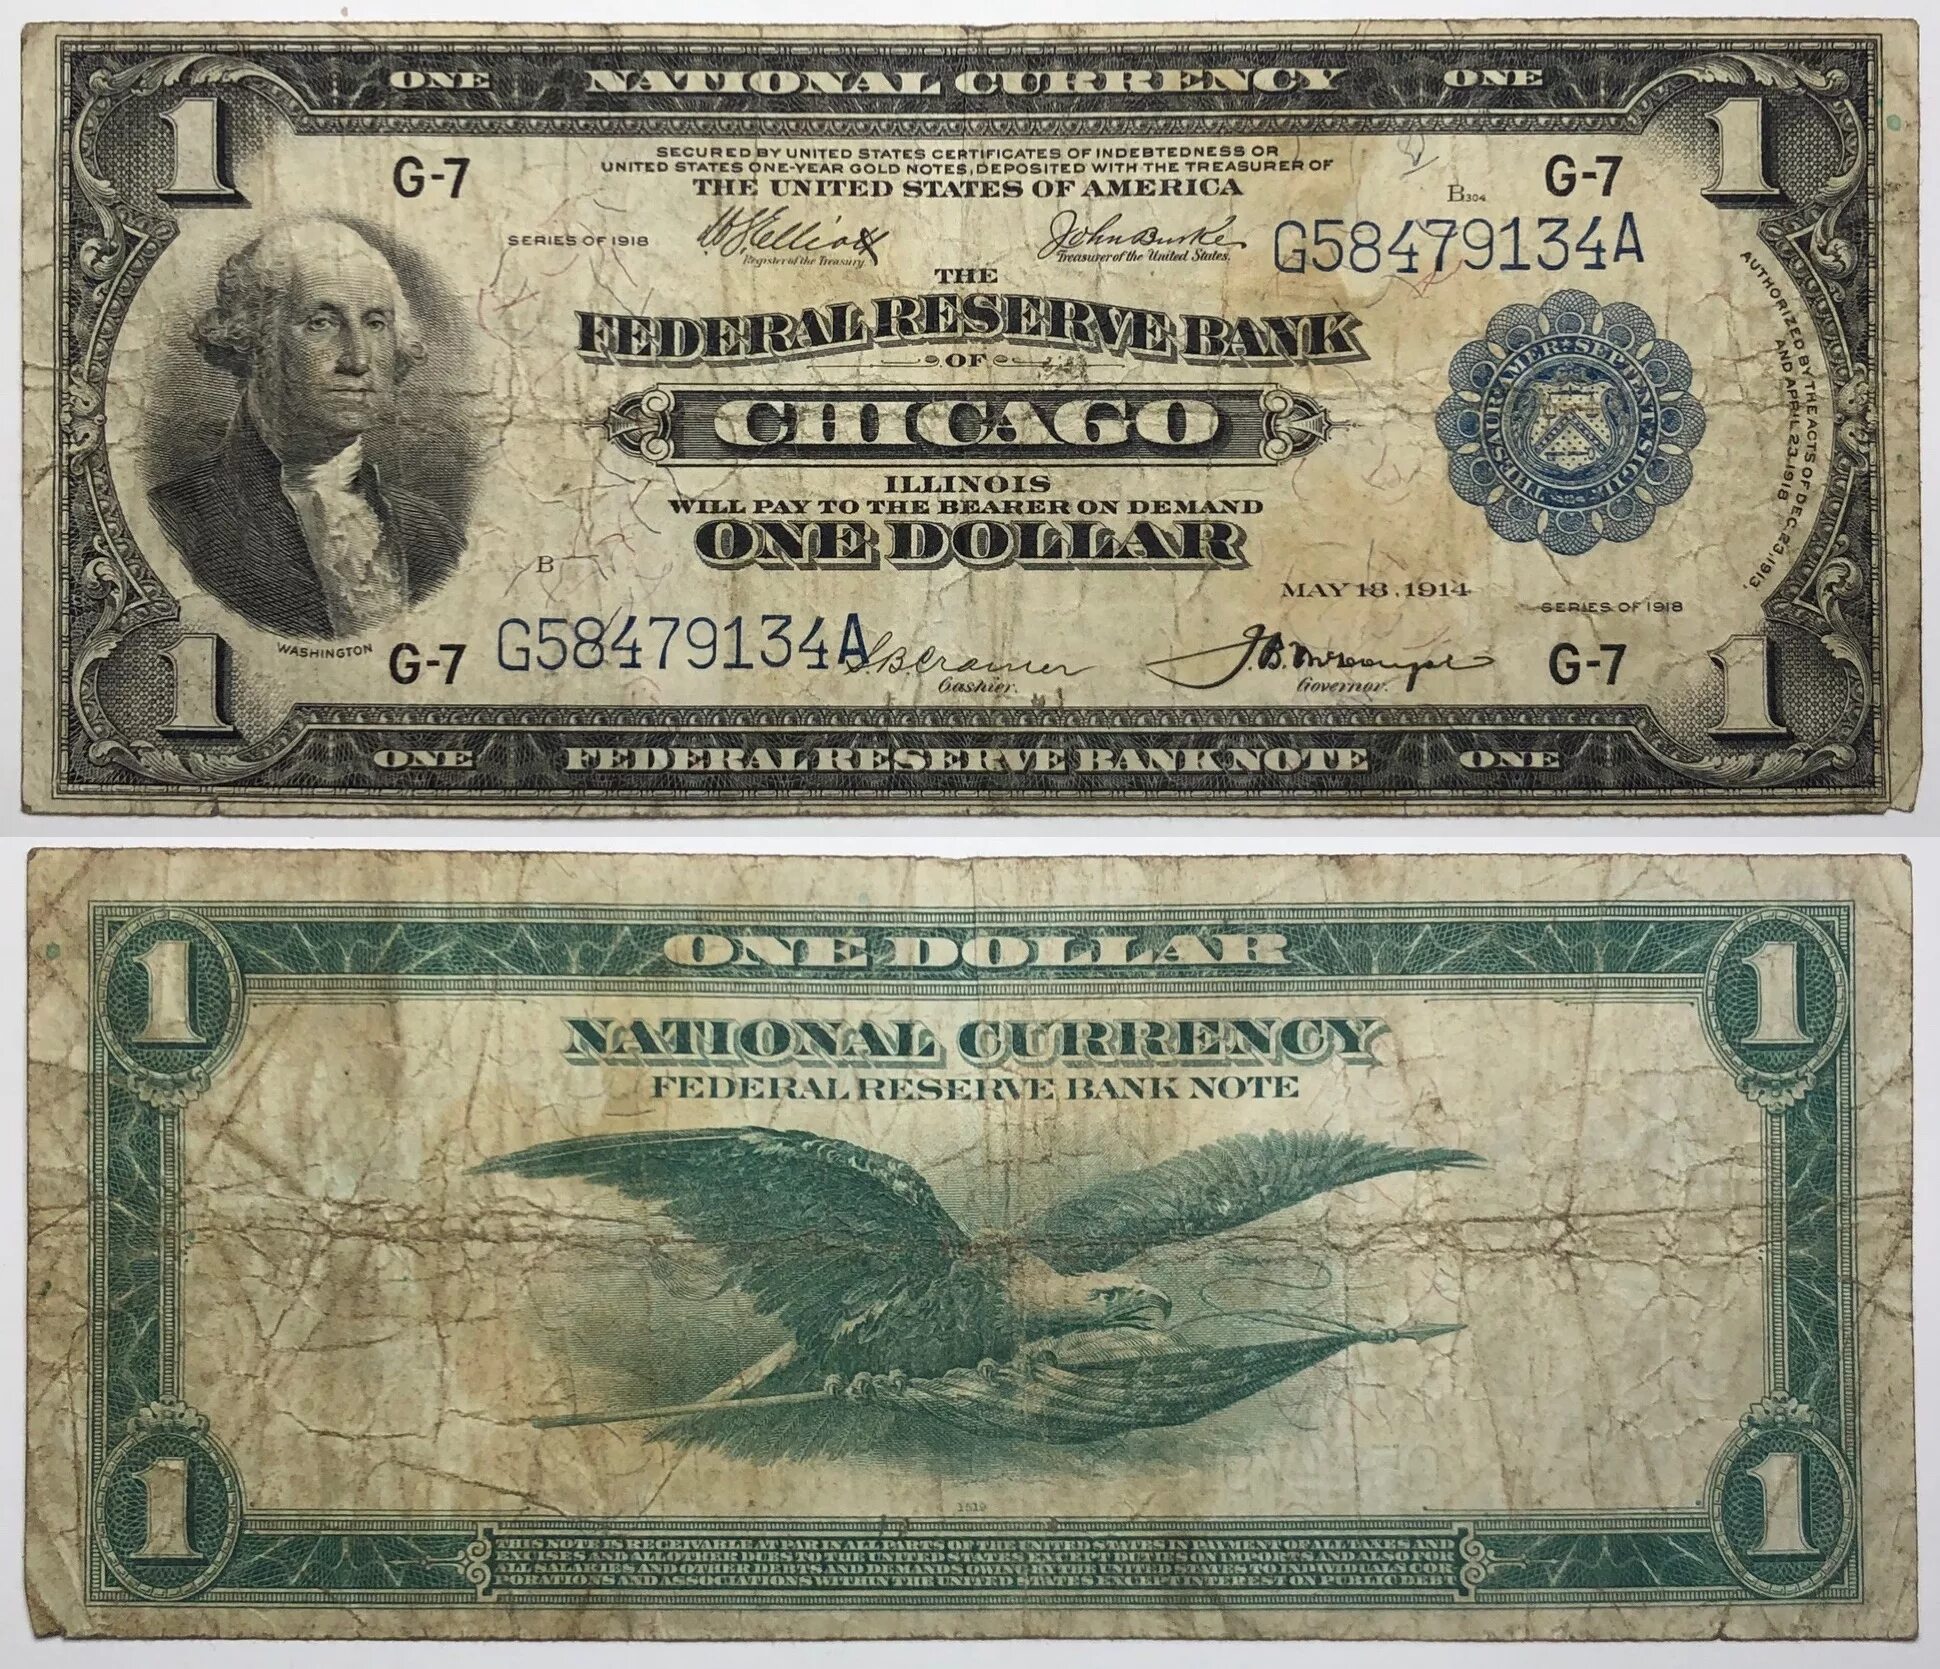 1918 $5,000 Federal Reserve Note. Банкнота 1 доллар. Первые банкноты США. Купюра 1 доллар США. 1 июля доллар